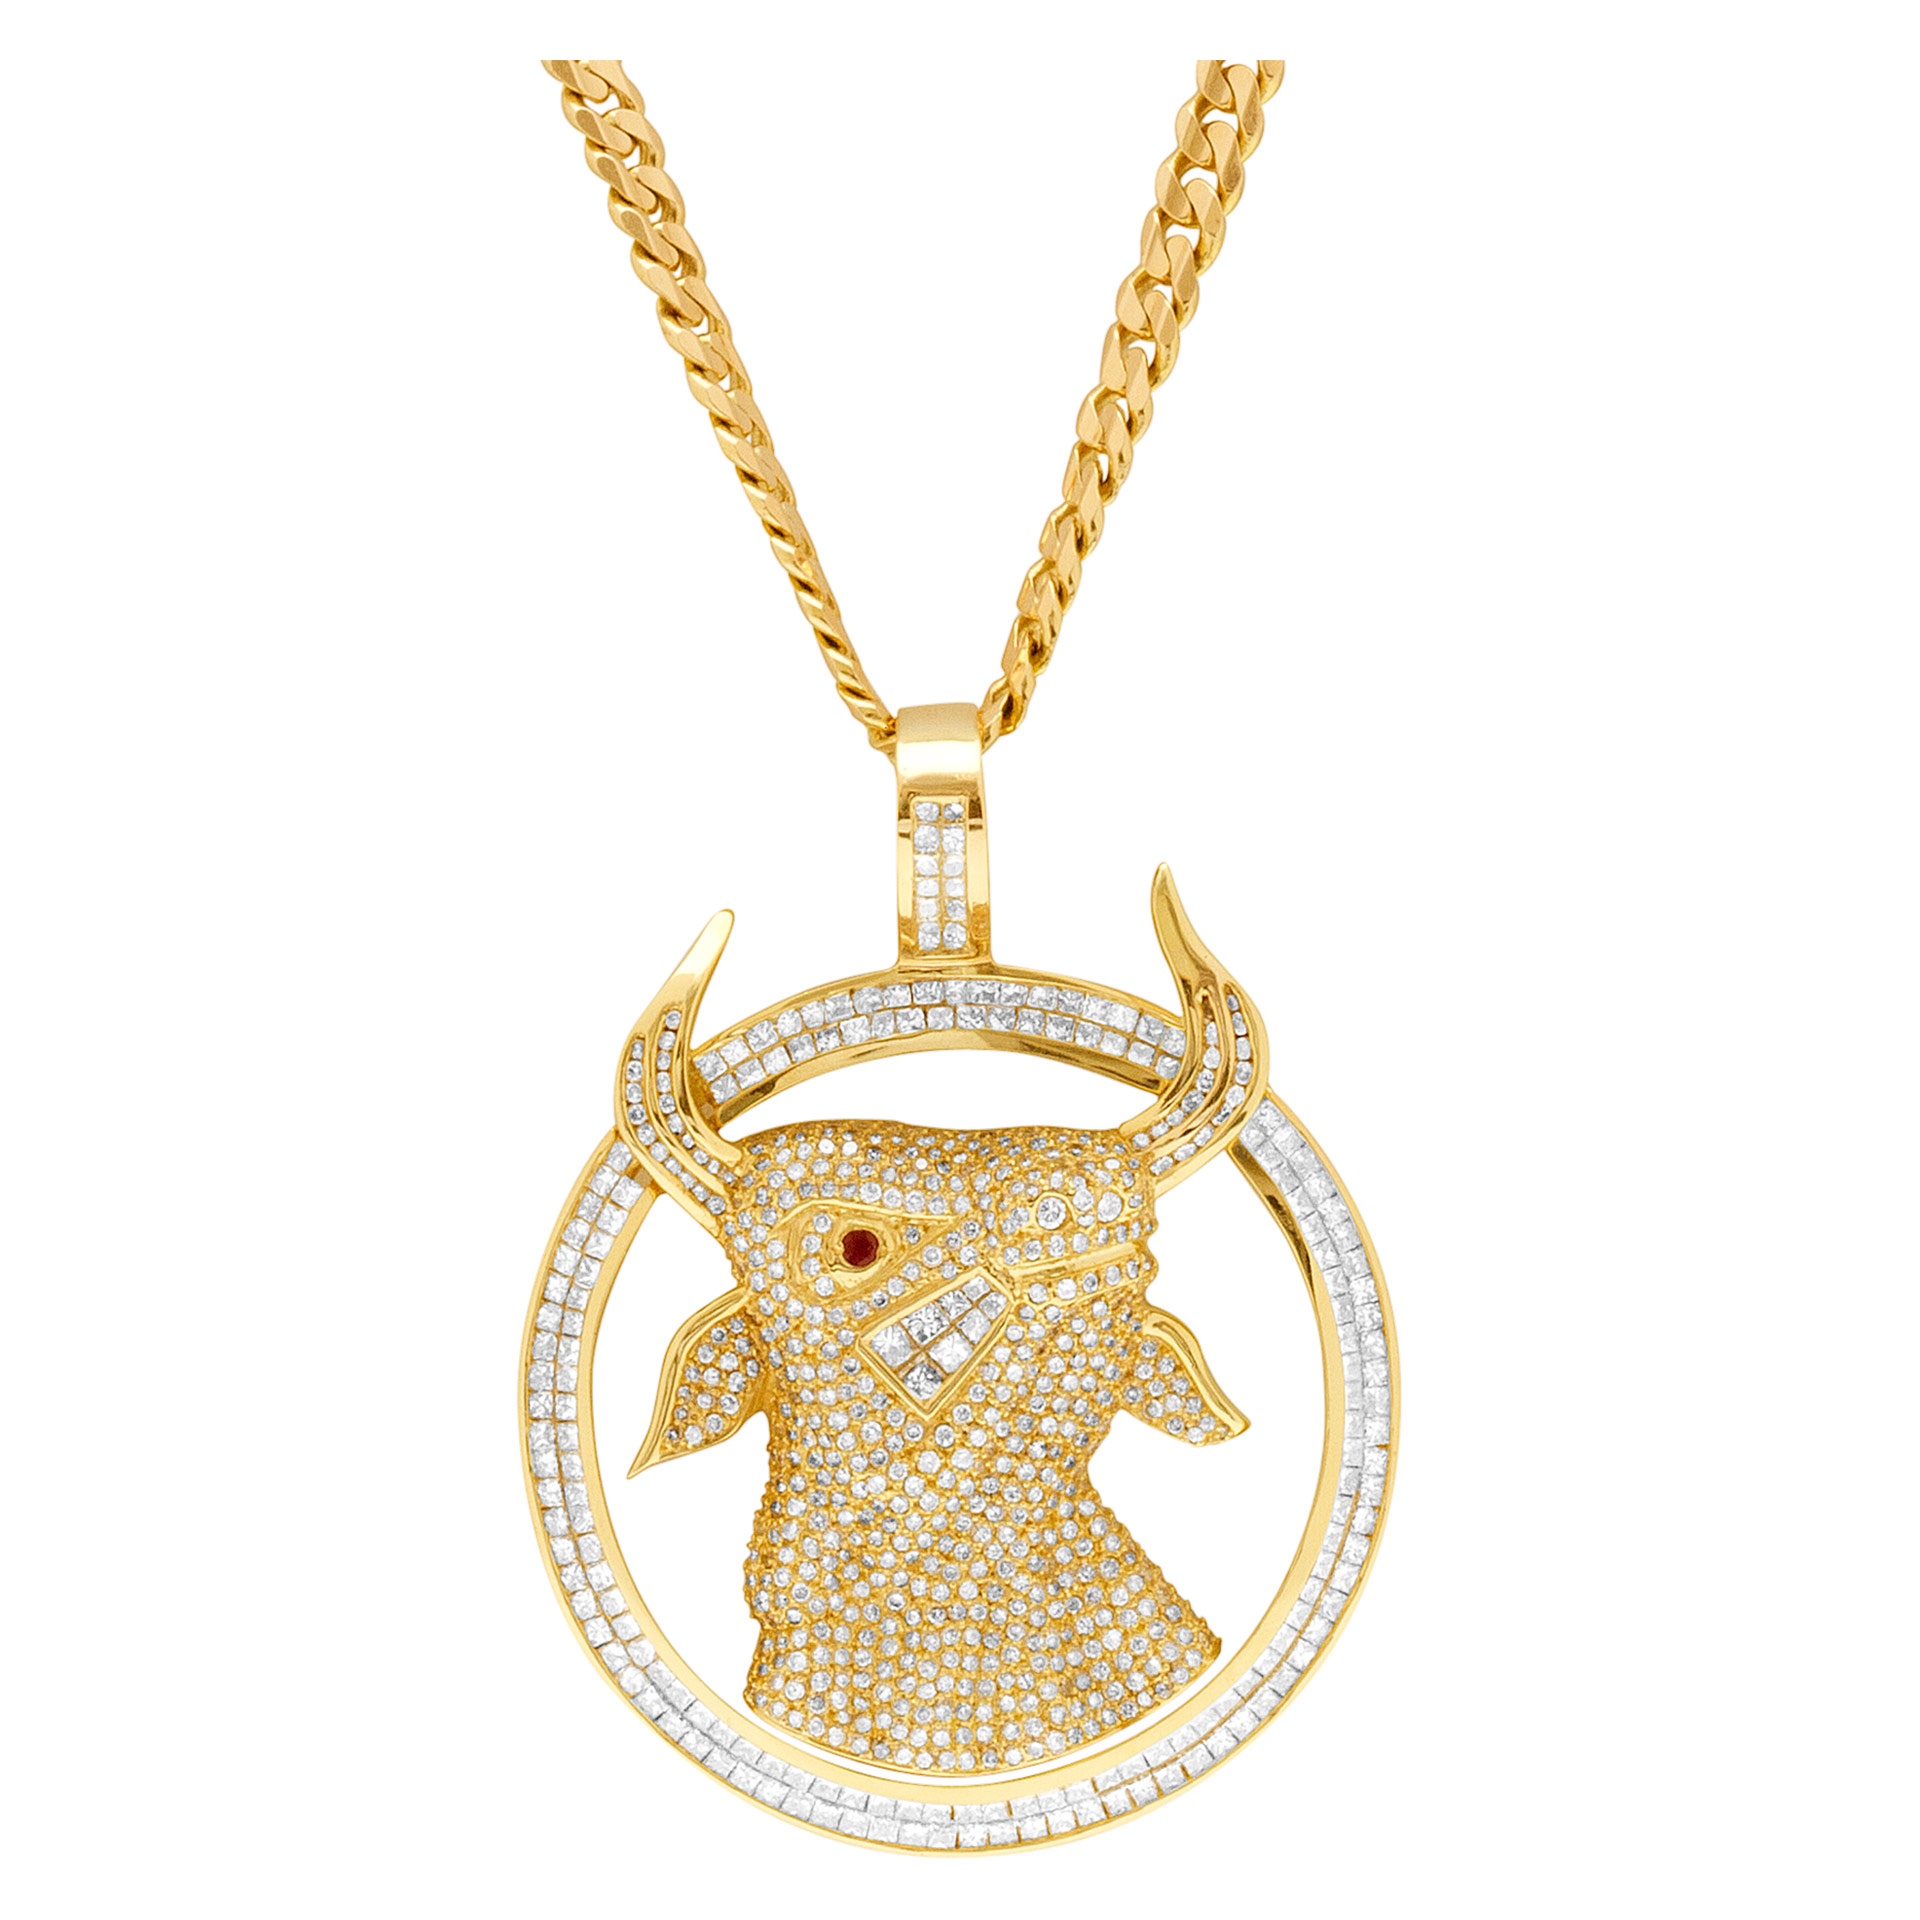 Bull pendant in 18k with app 15 carats in diamonds image 1